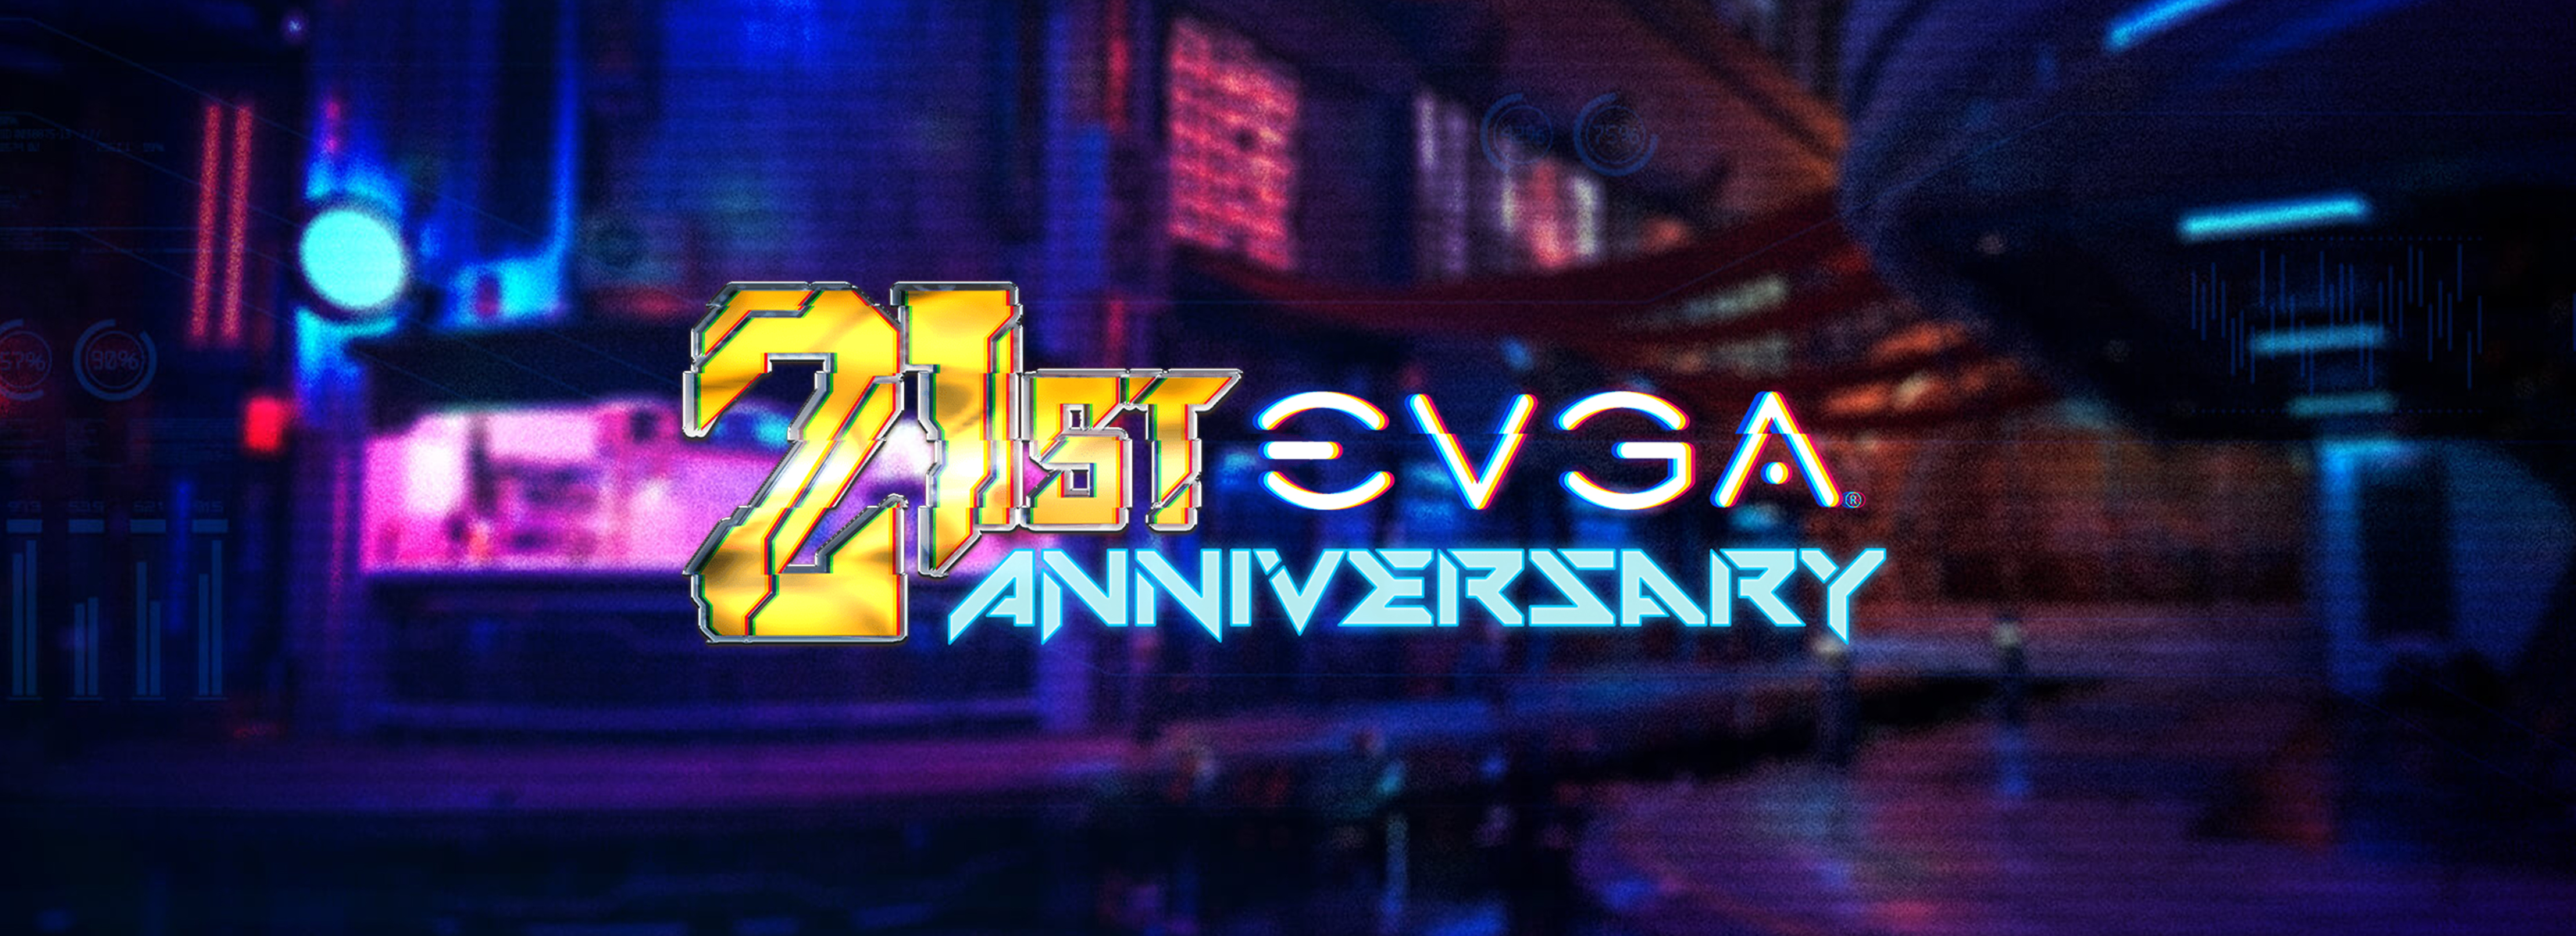 EVGA 21st Anniversary Live Stream Event